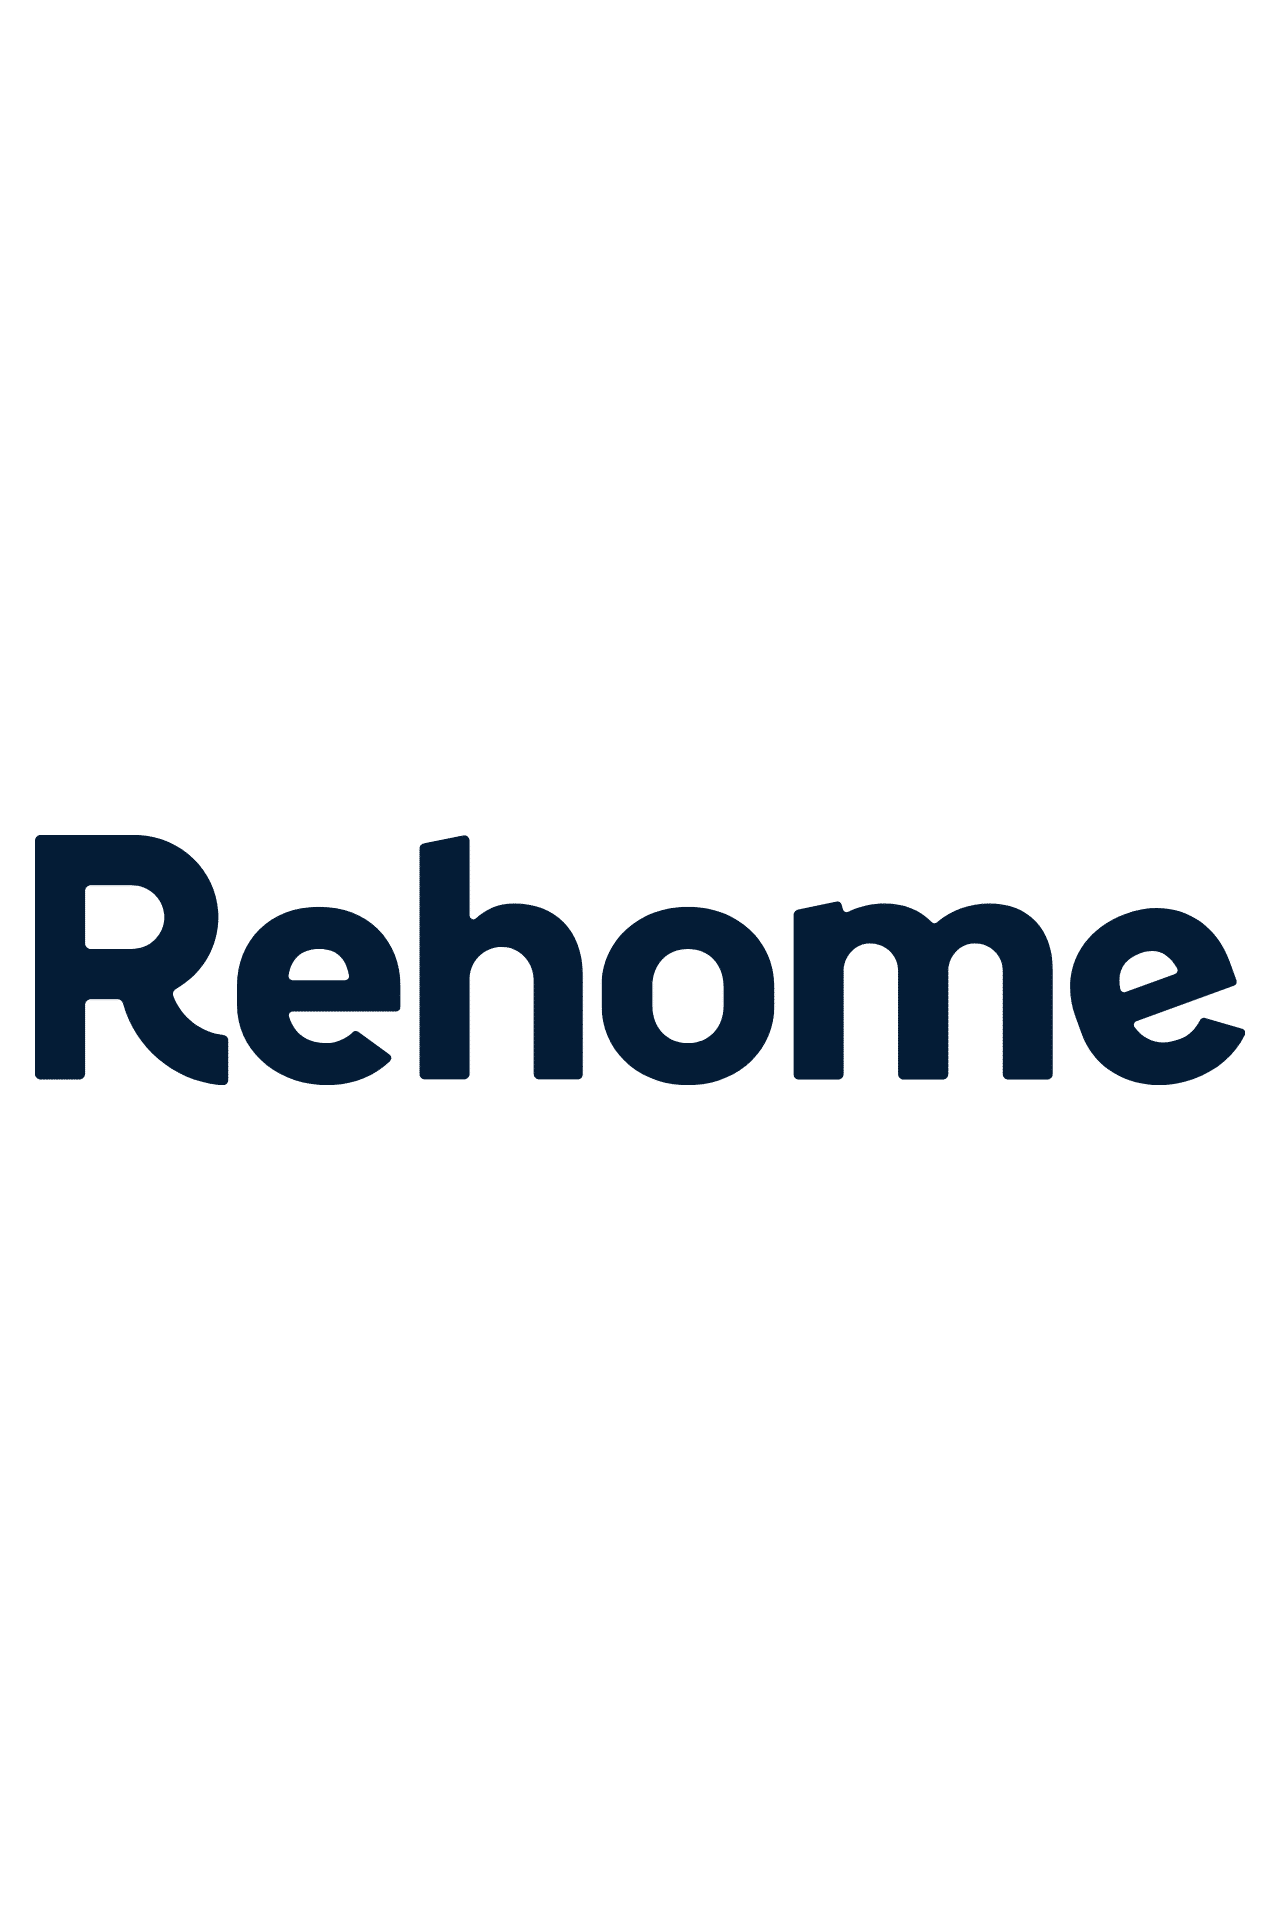 Rehome logo